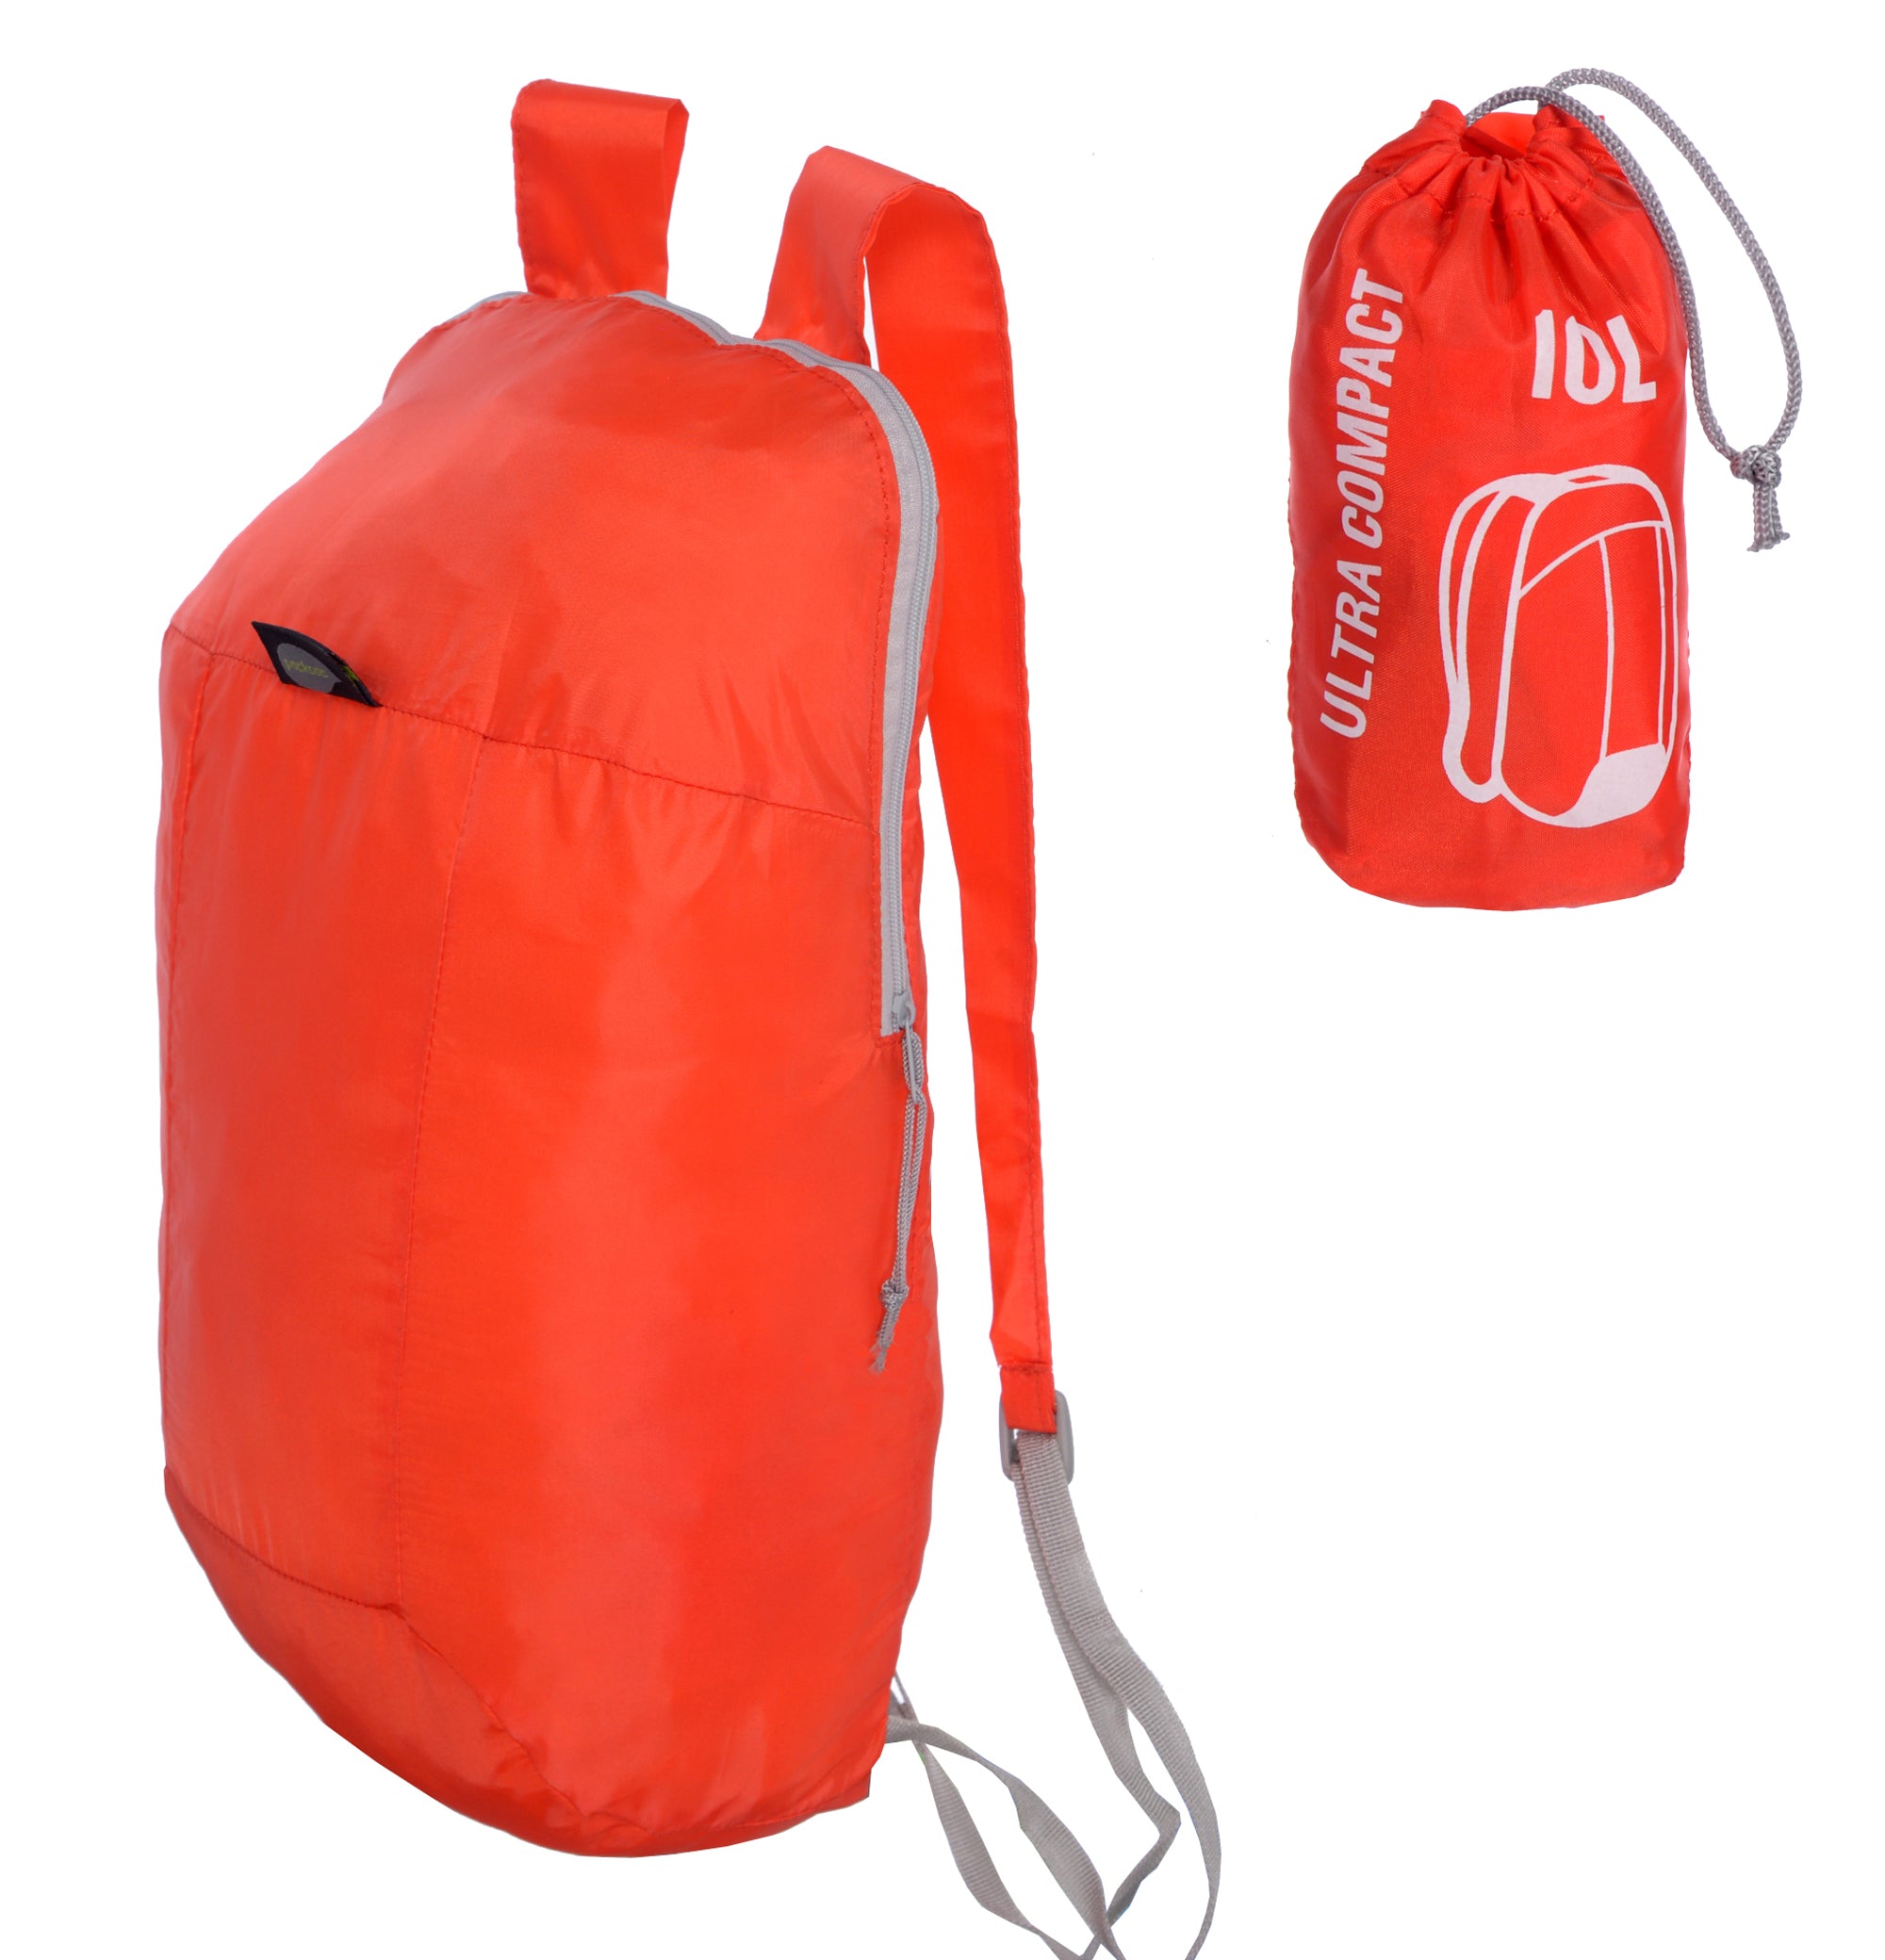 Foldable 10L Backpack